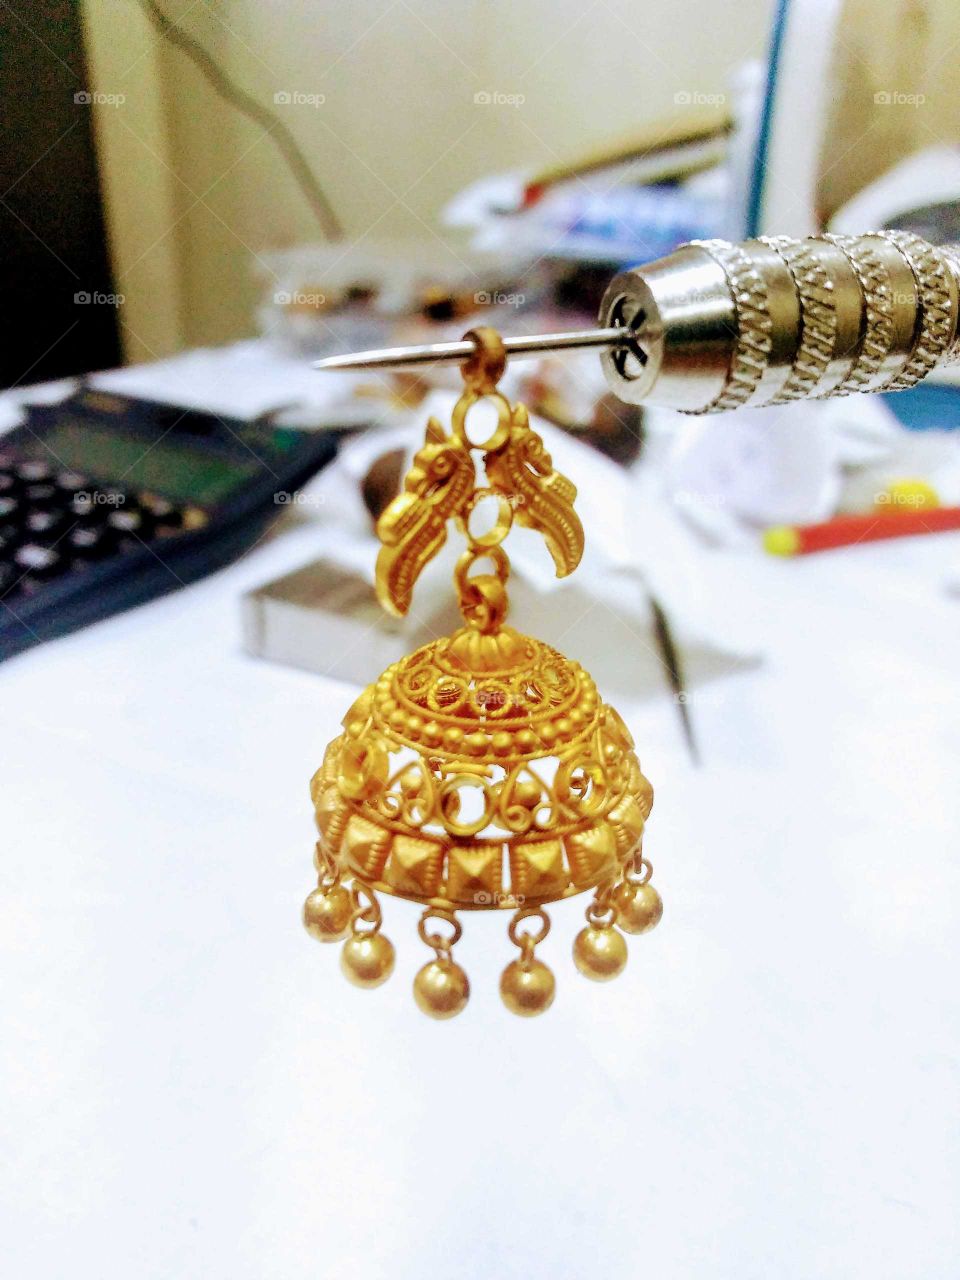 Making gold jewellery